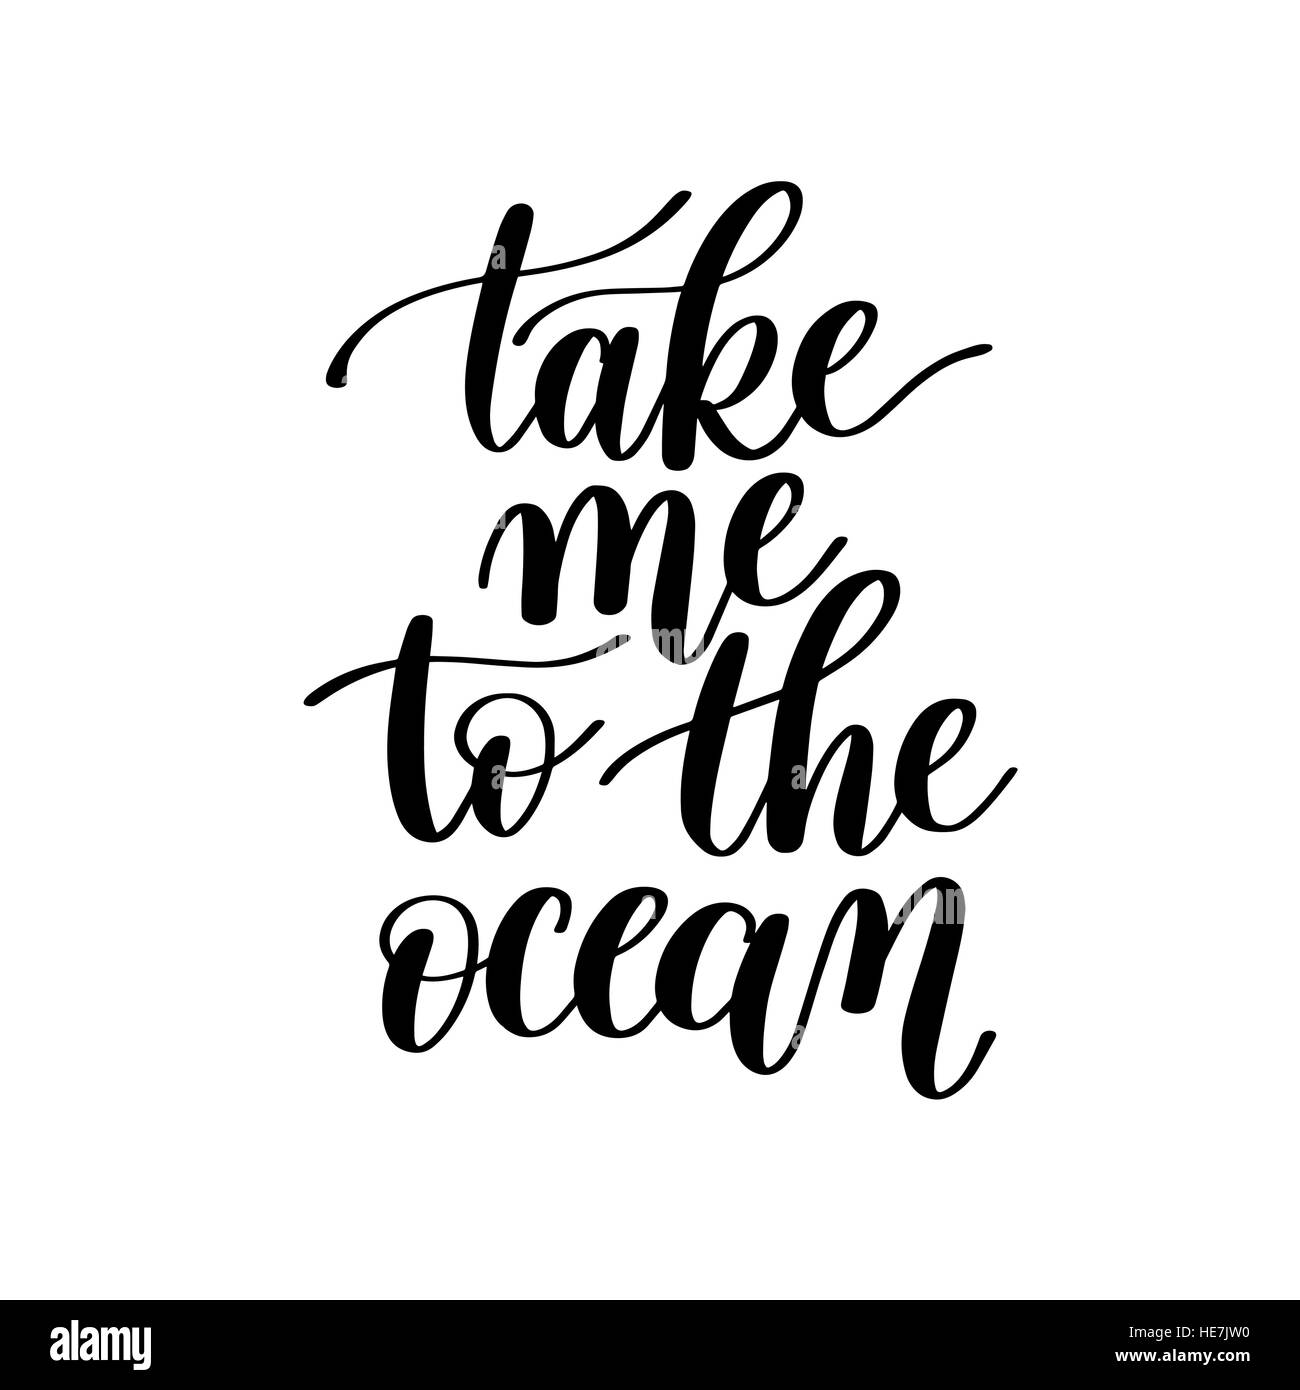 Take Me to the Ocean Vector Text Phrase Image Stock Vector